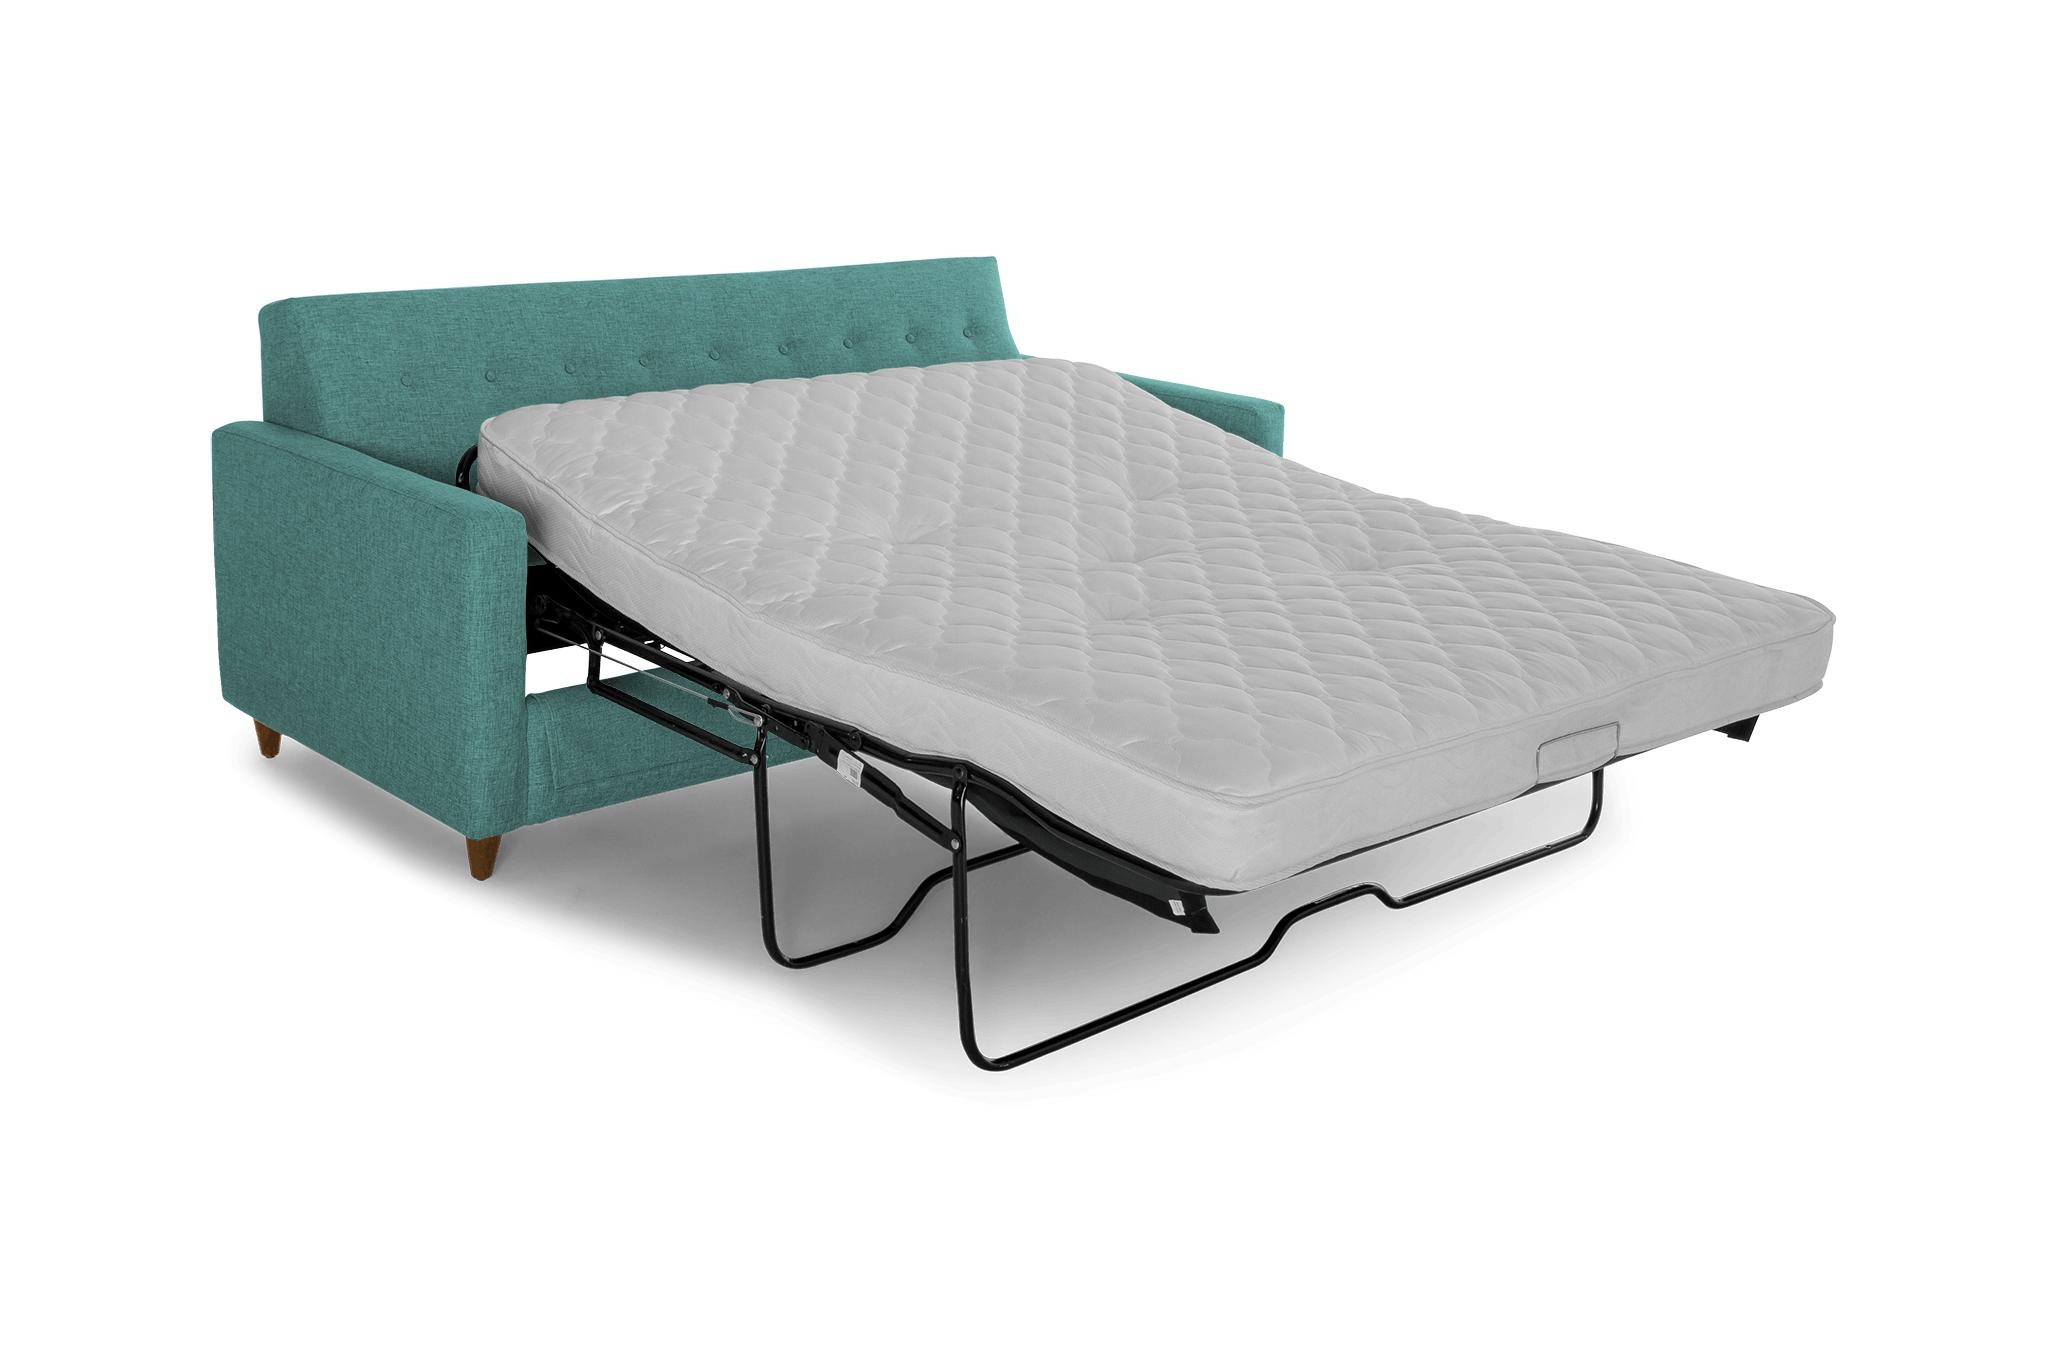 Green Korver Mid Century Modern Sleeper Sofa - Essence Aqua - Mocha - Image 1